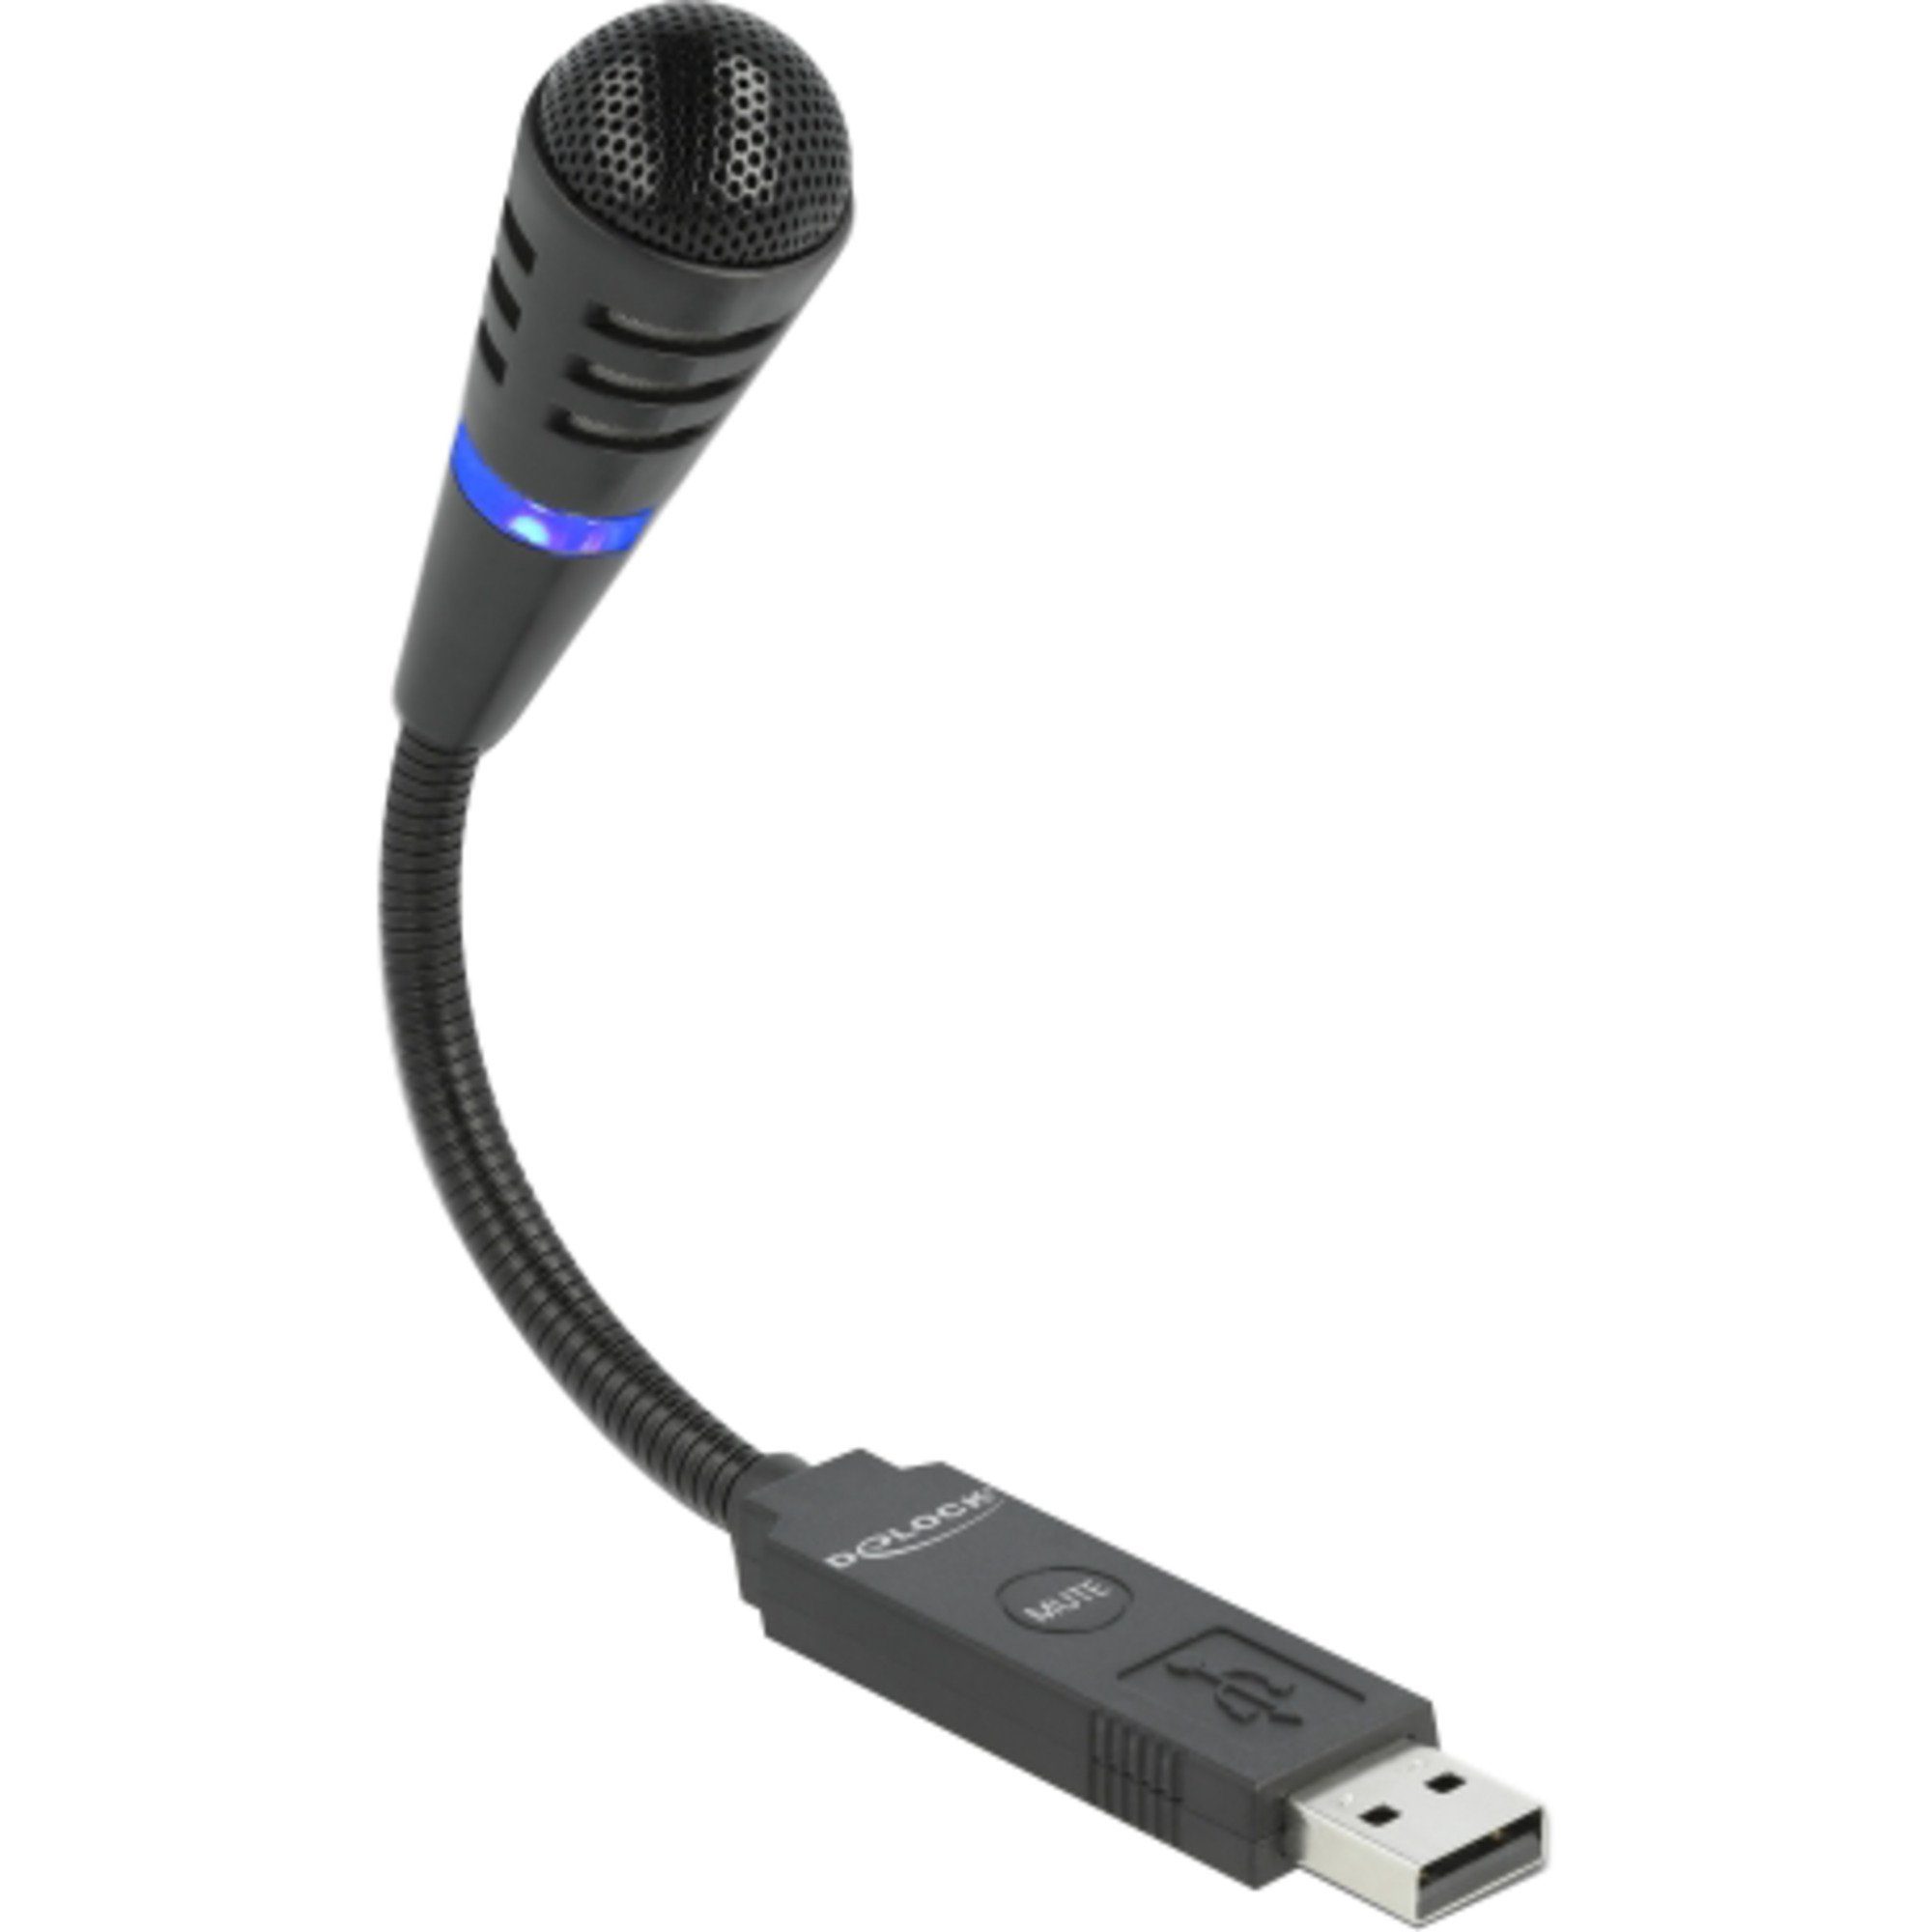 Delock DeLOCK USB Schwanenhals Mikrofon Gaming-Headset